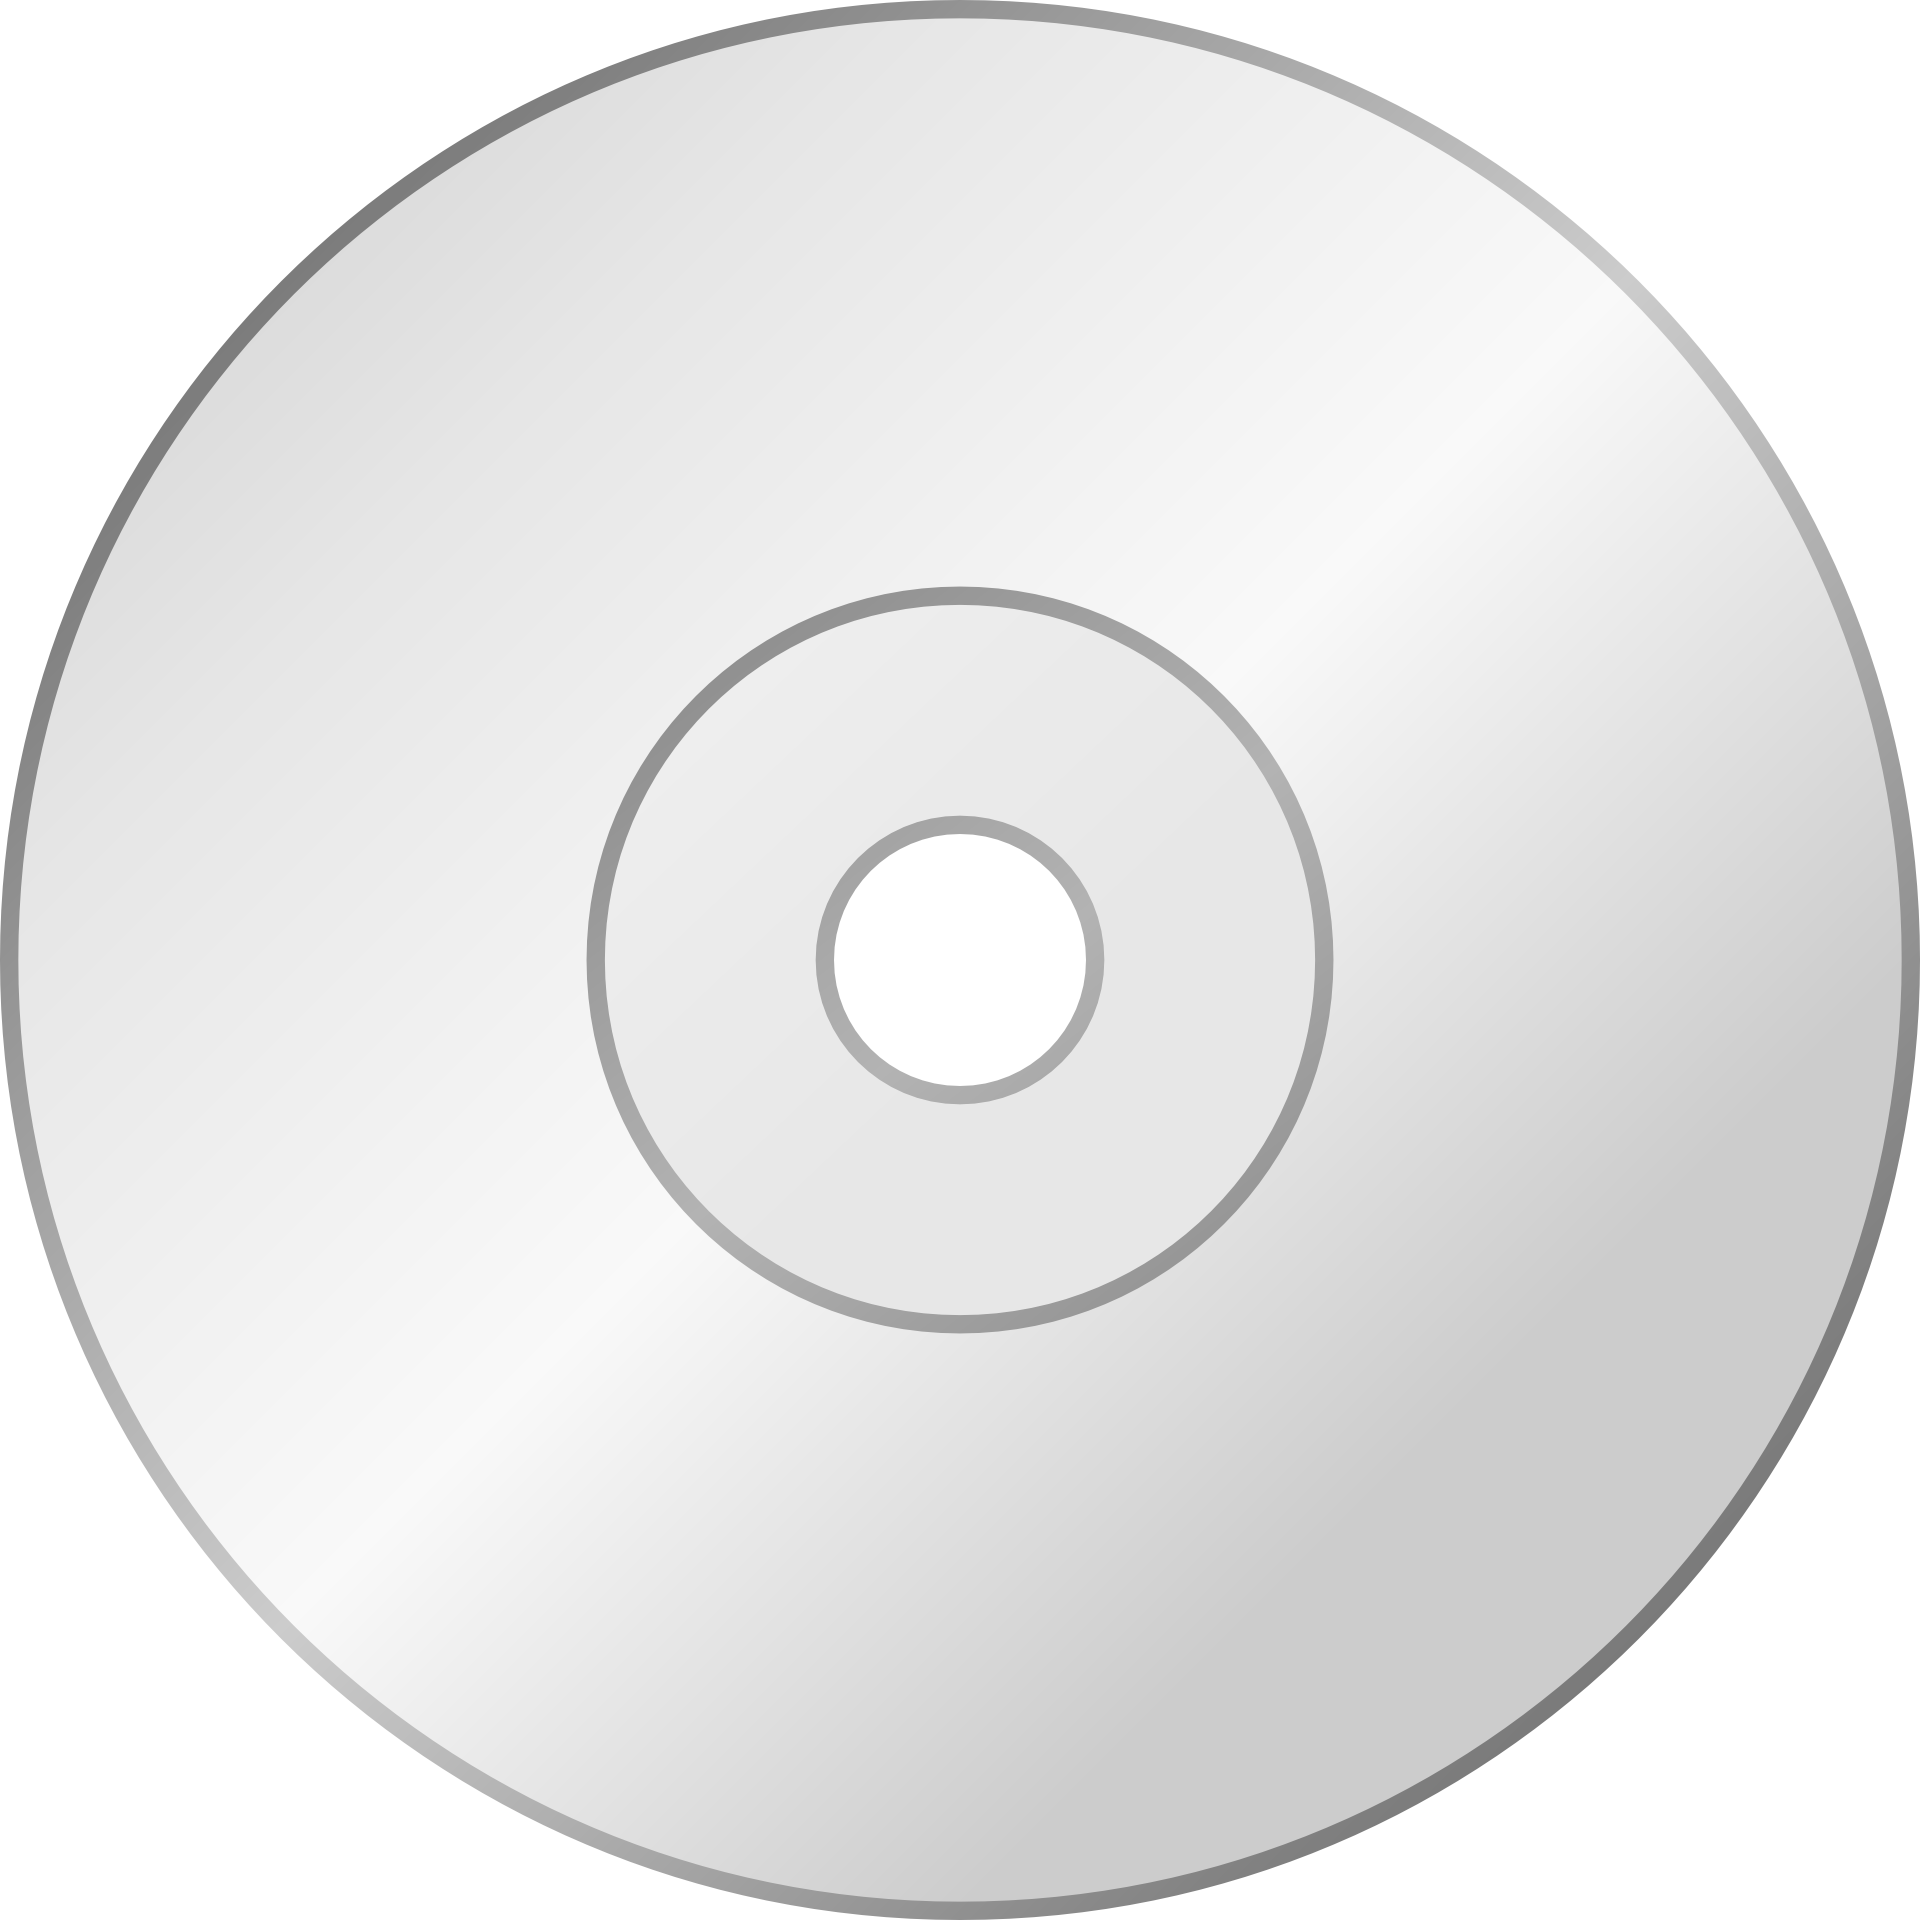 Cd disc drawing free image download